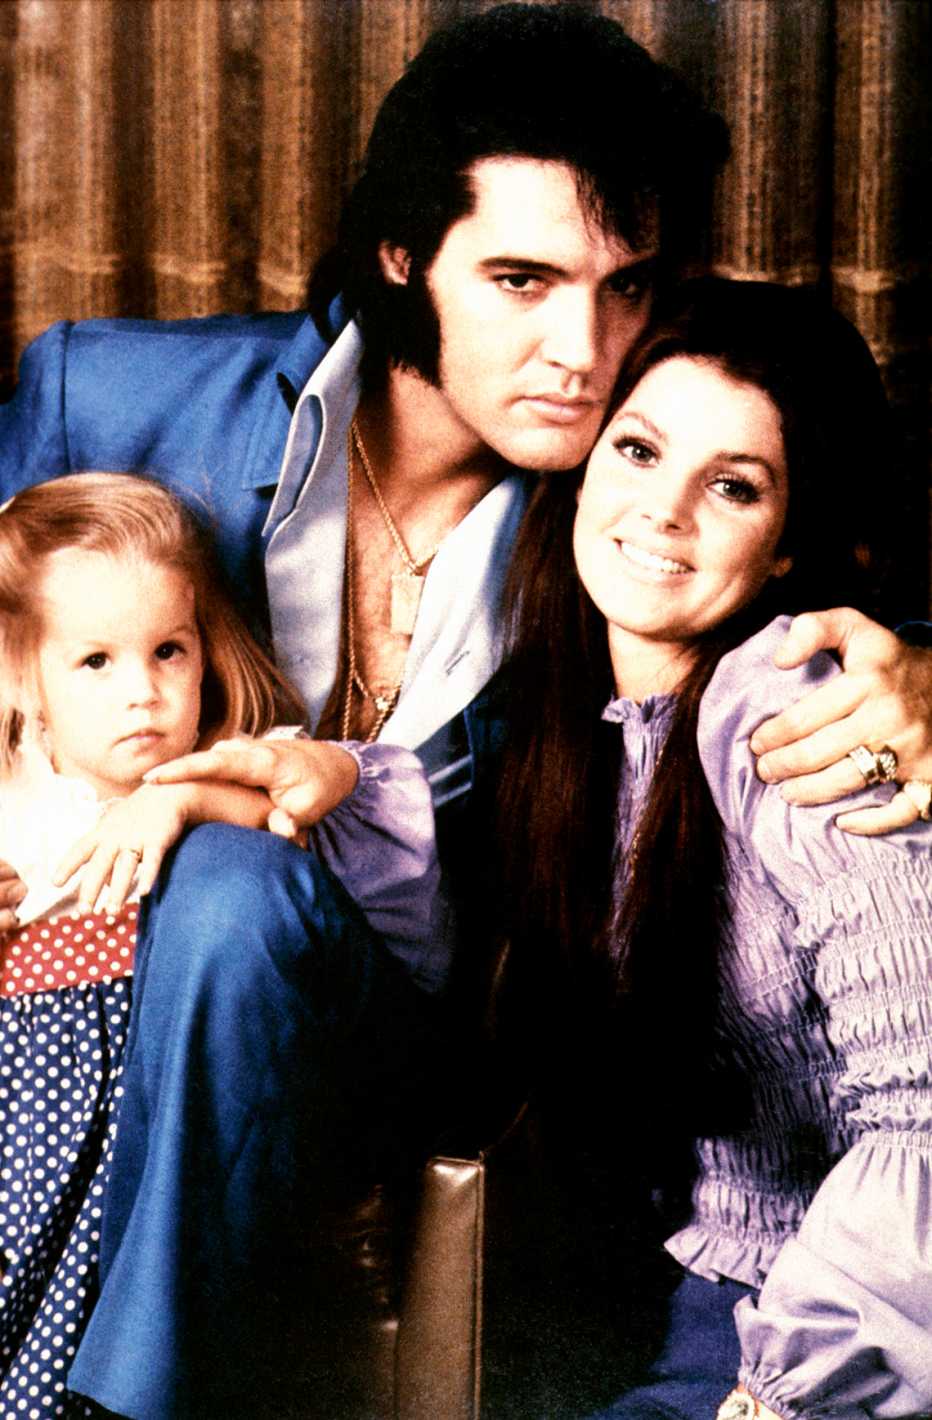 Lisa Marie Presley, Elvis Presley and Priscilla Presley in a photo together